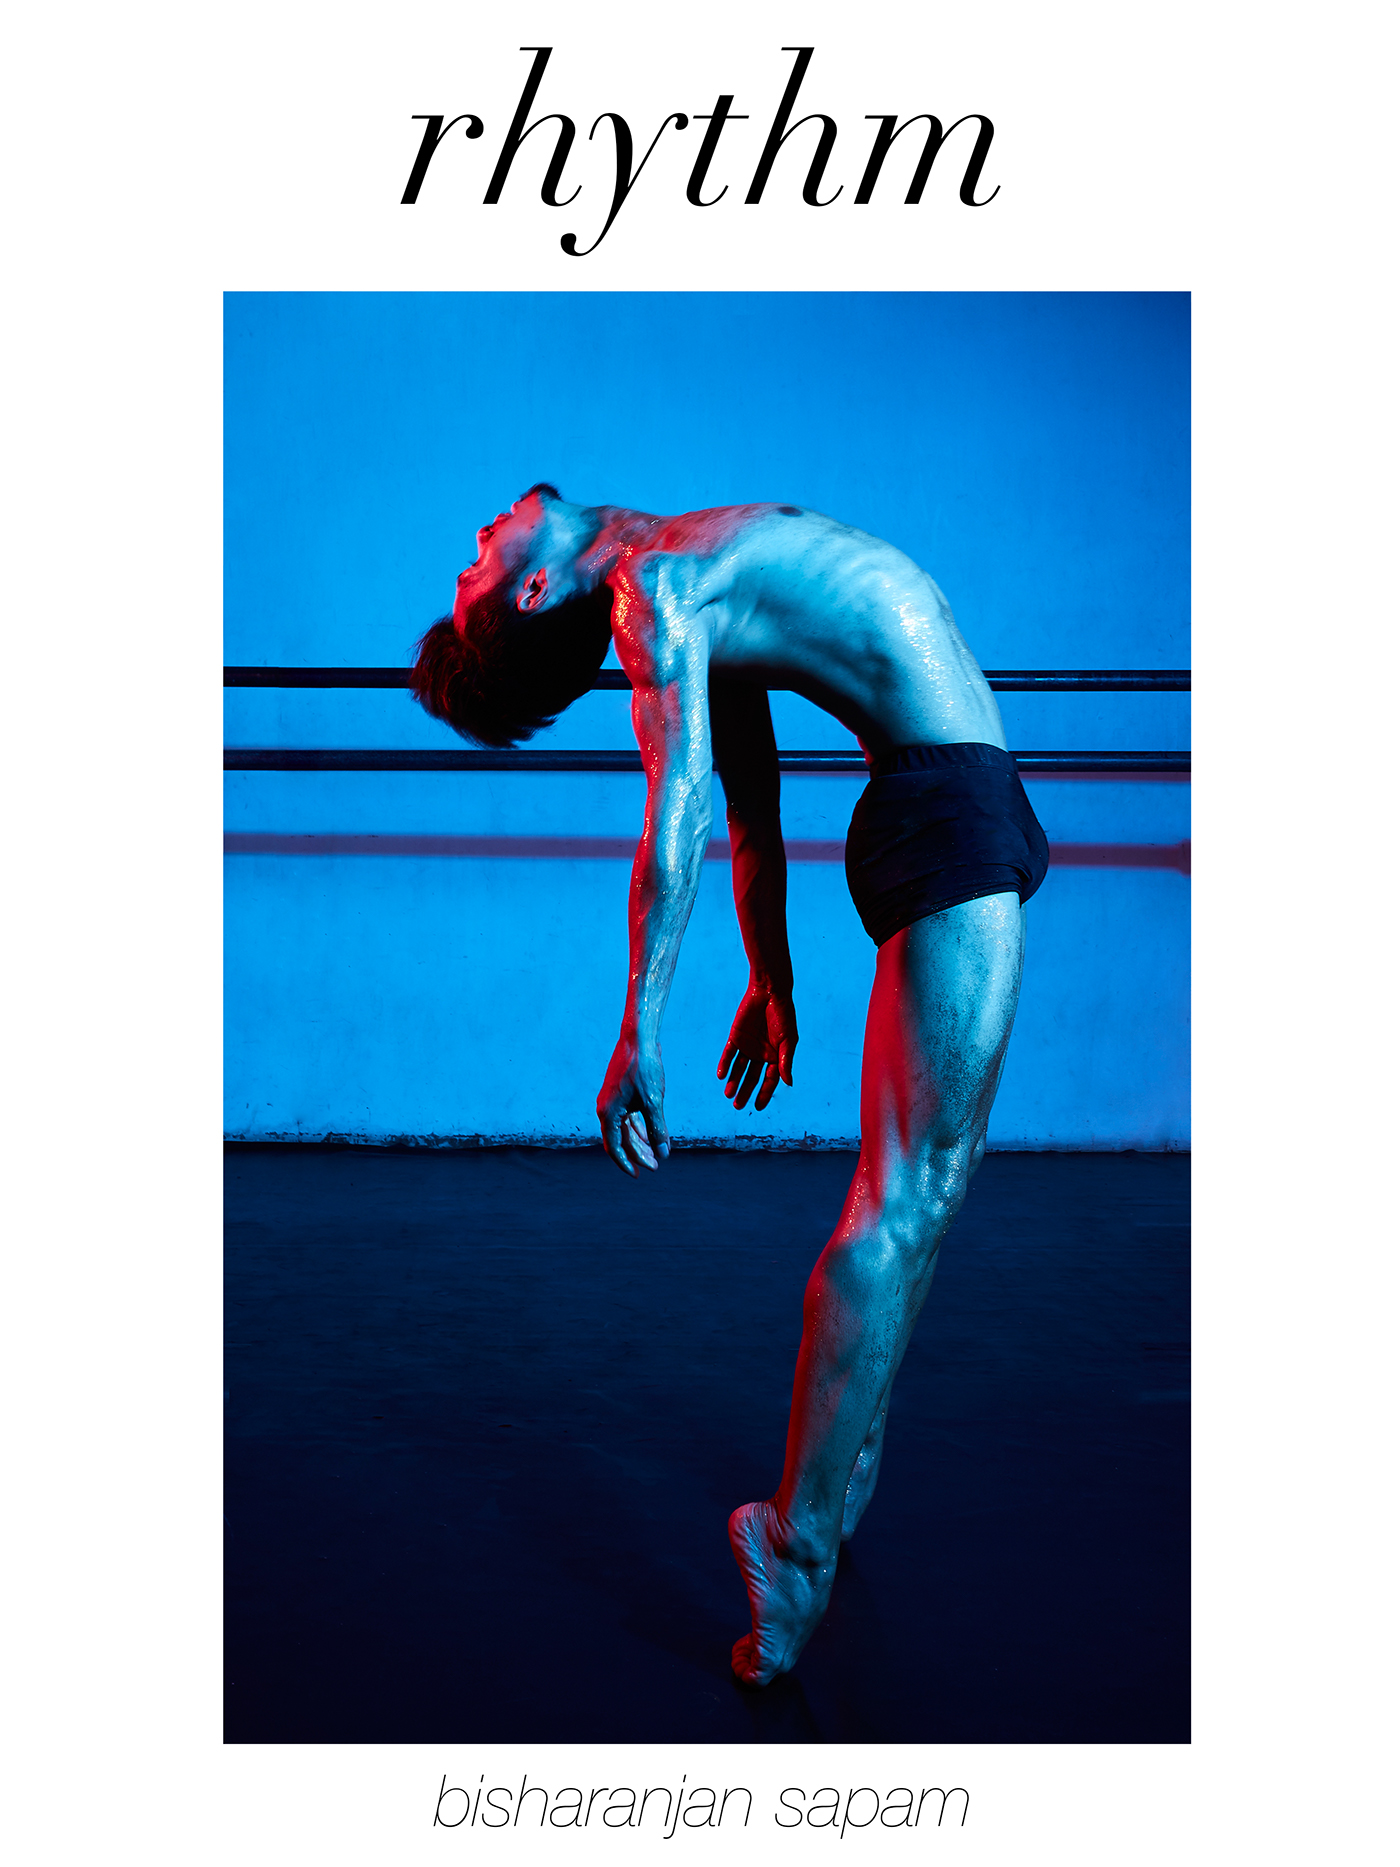 ballet DANCE   rhythm Photography  flexible gellight movement